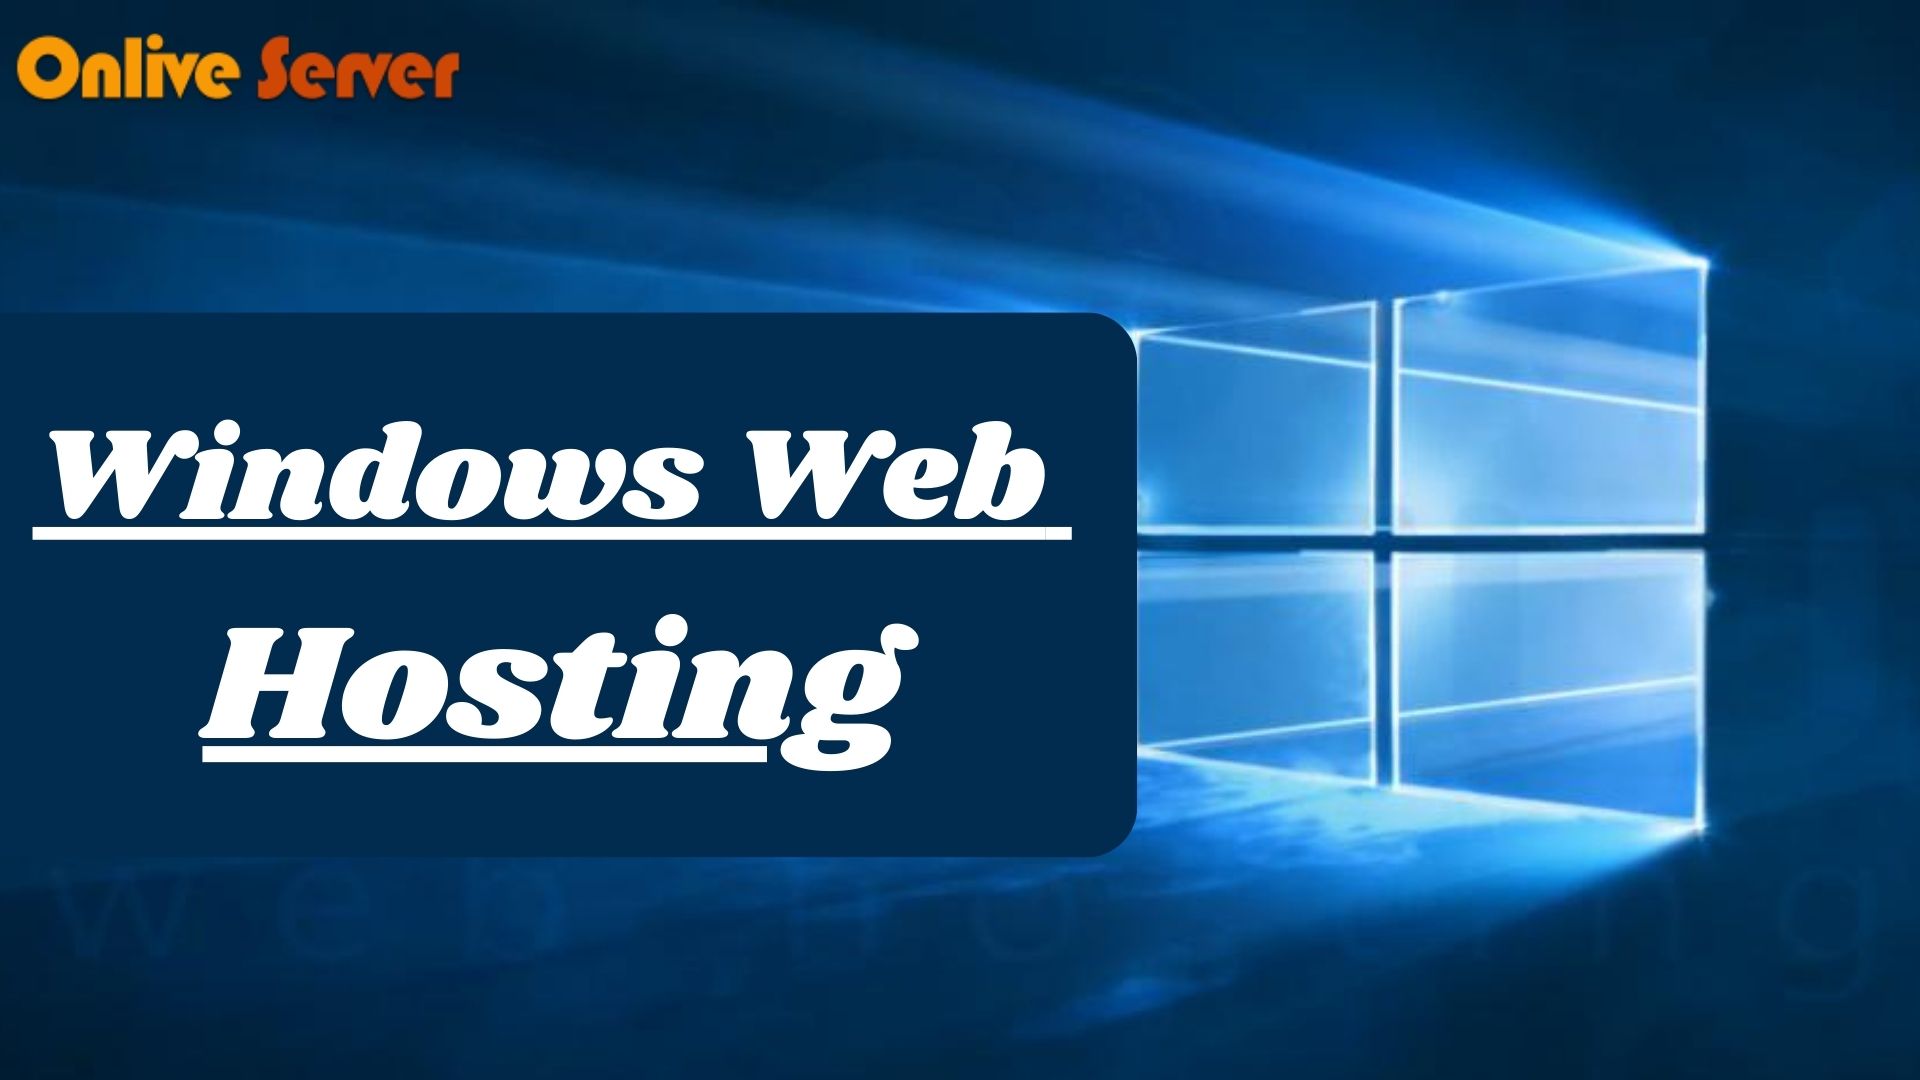 Windows web hosting